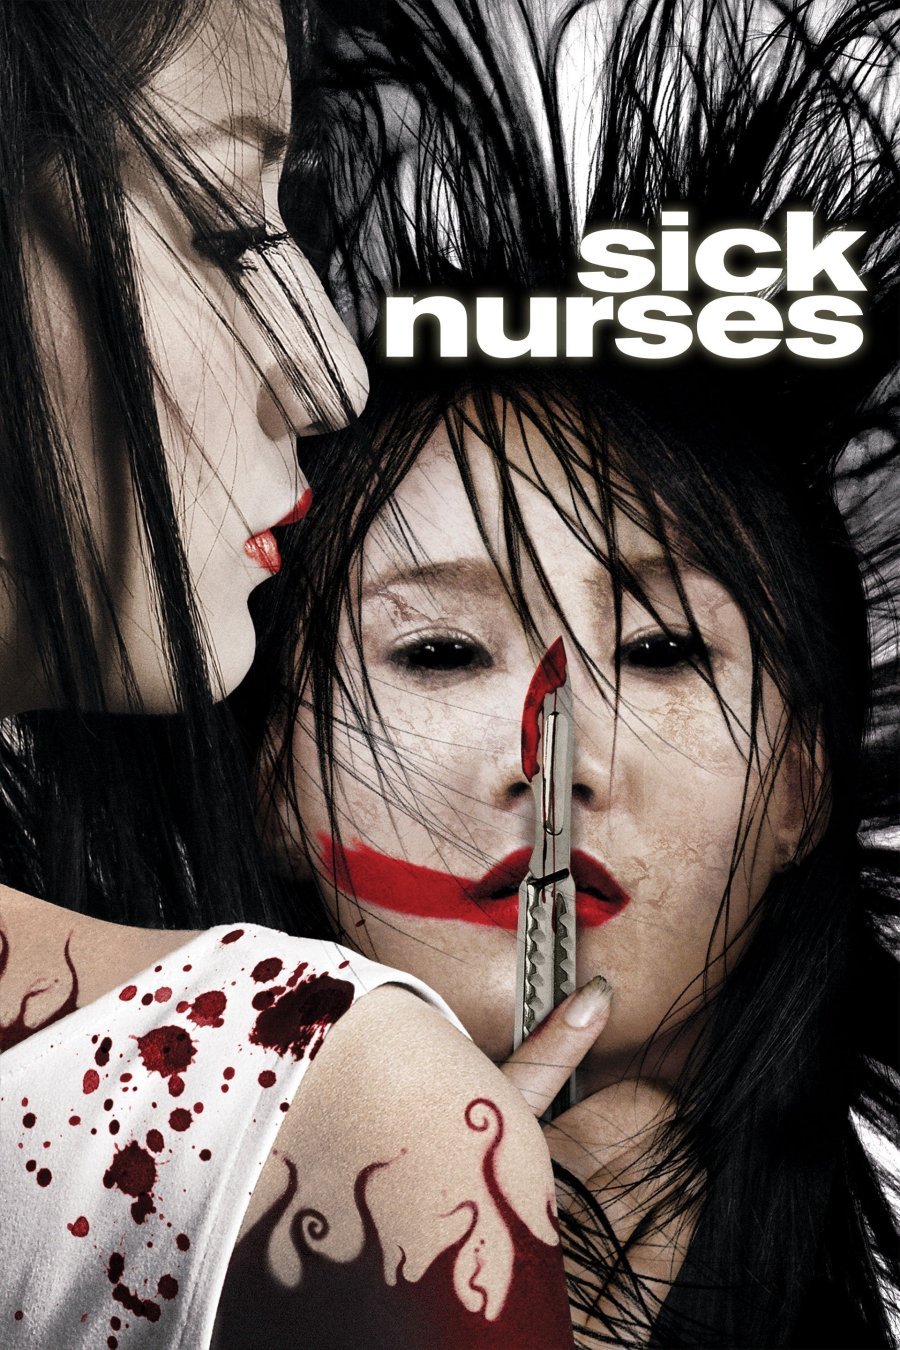 Больные медсестры (2007)